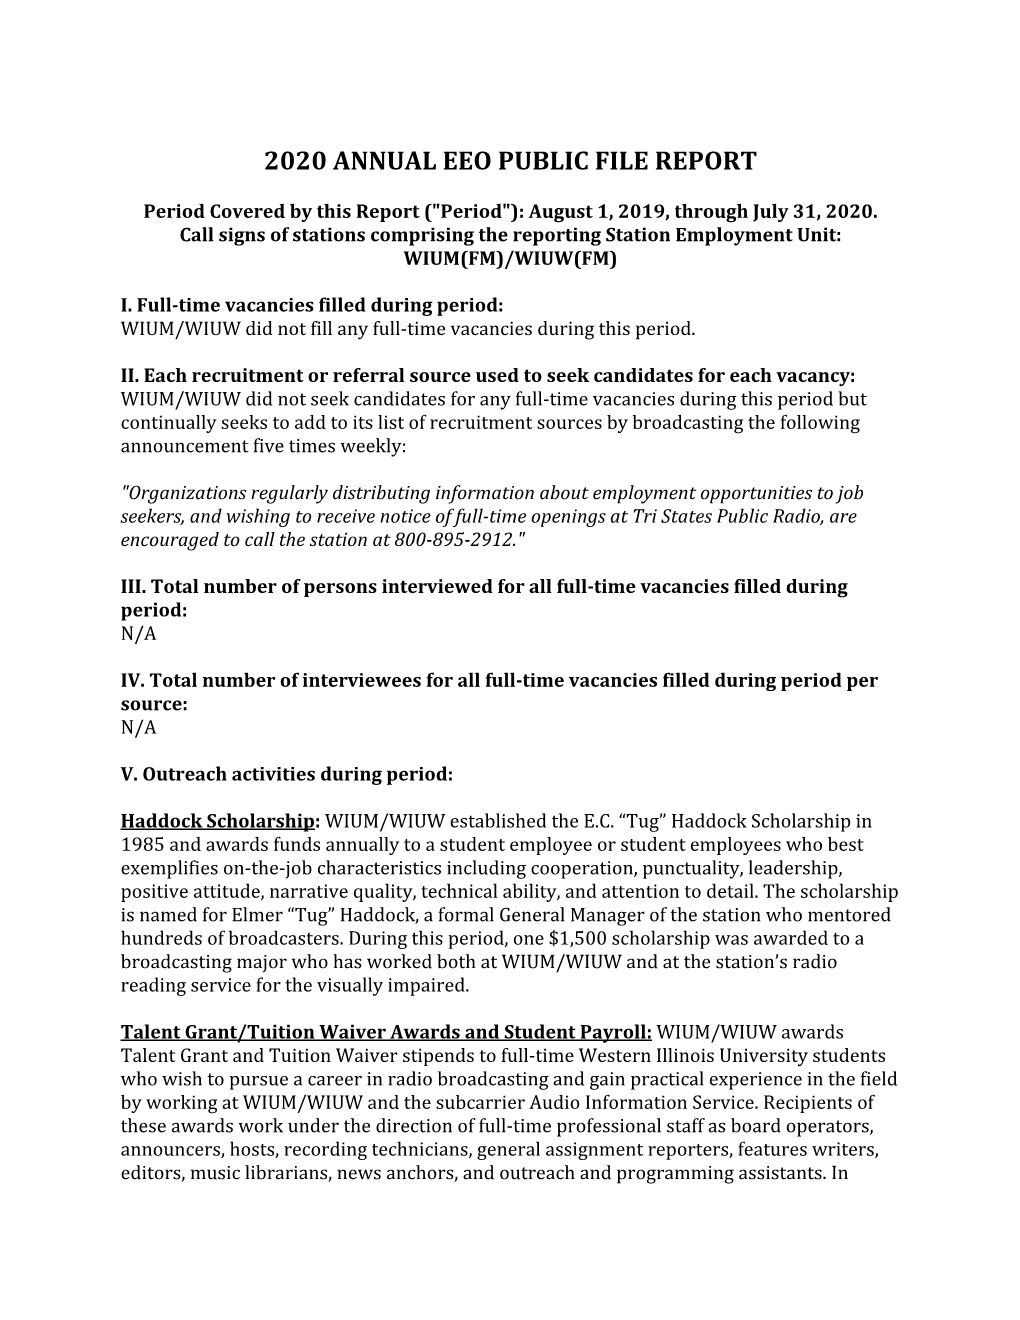 2020 Annual Eeo Public File Report